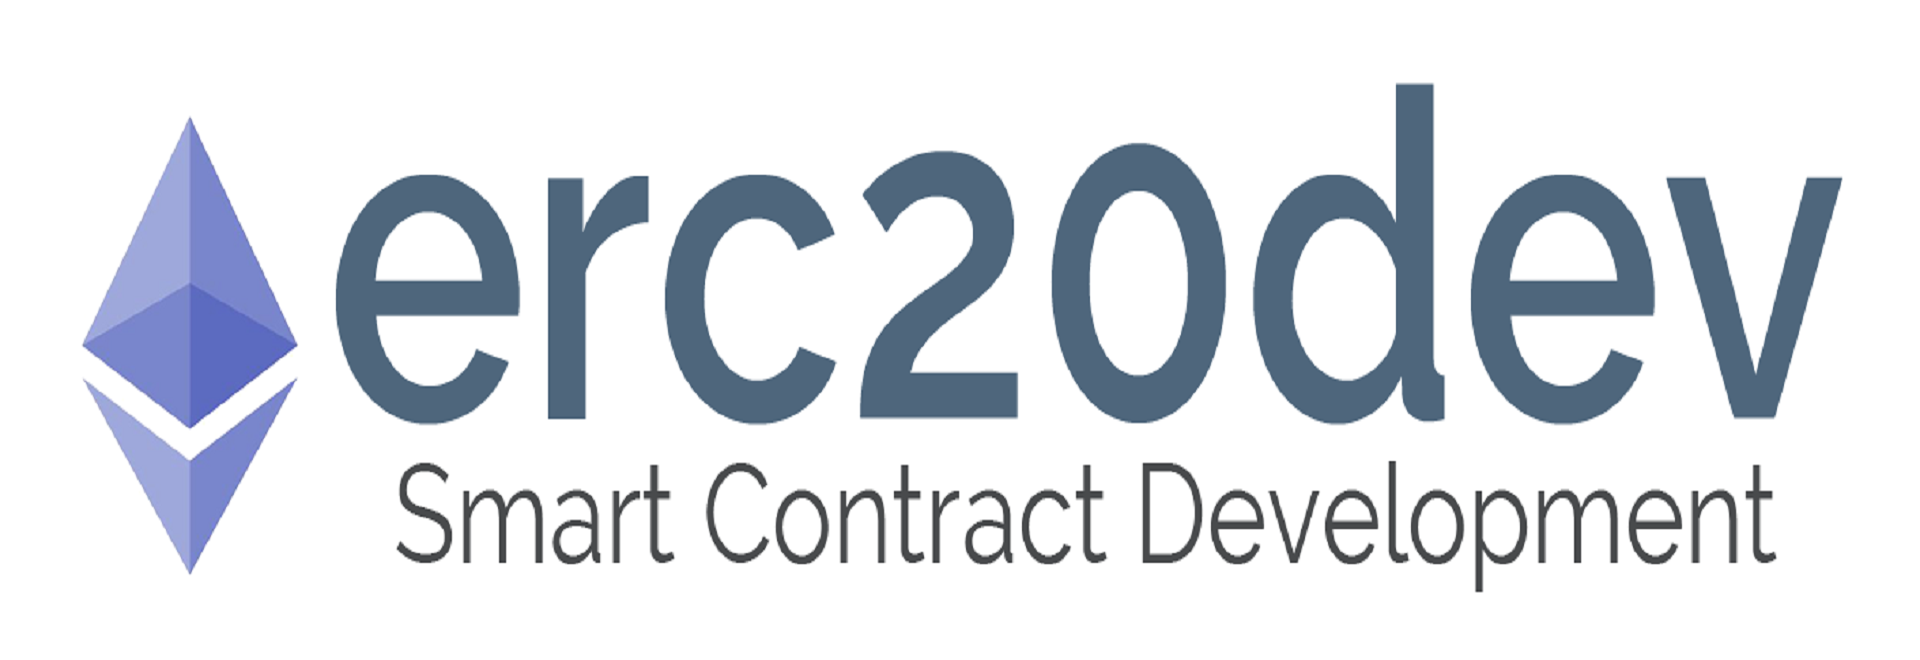 erc20 smart comtract development - قراردادهای هوشمند ERC-20( بخش اول)